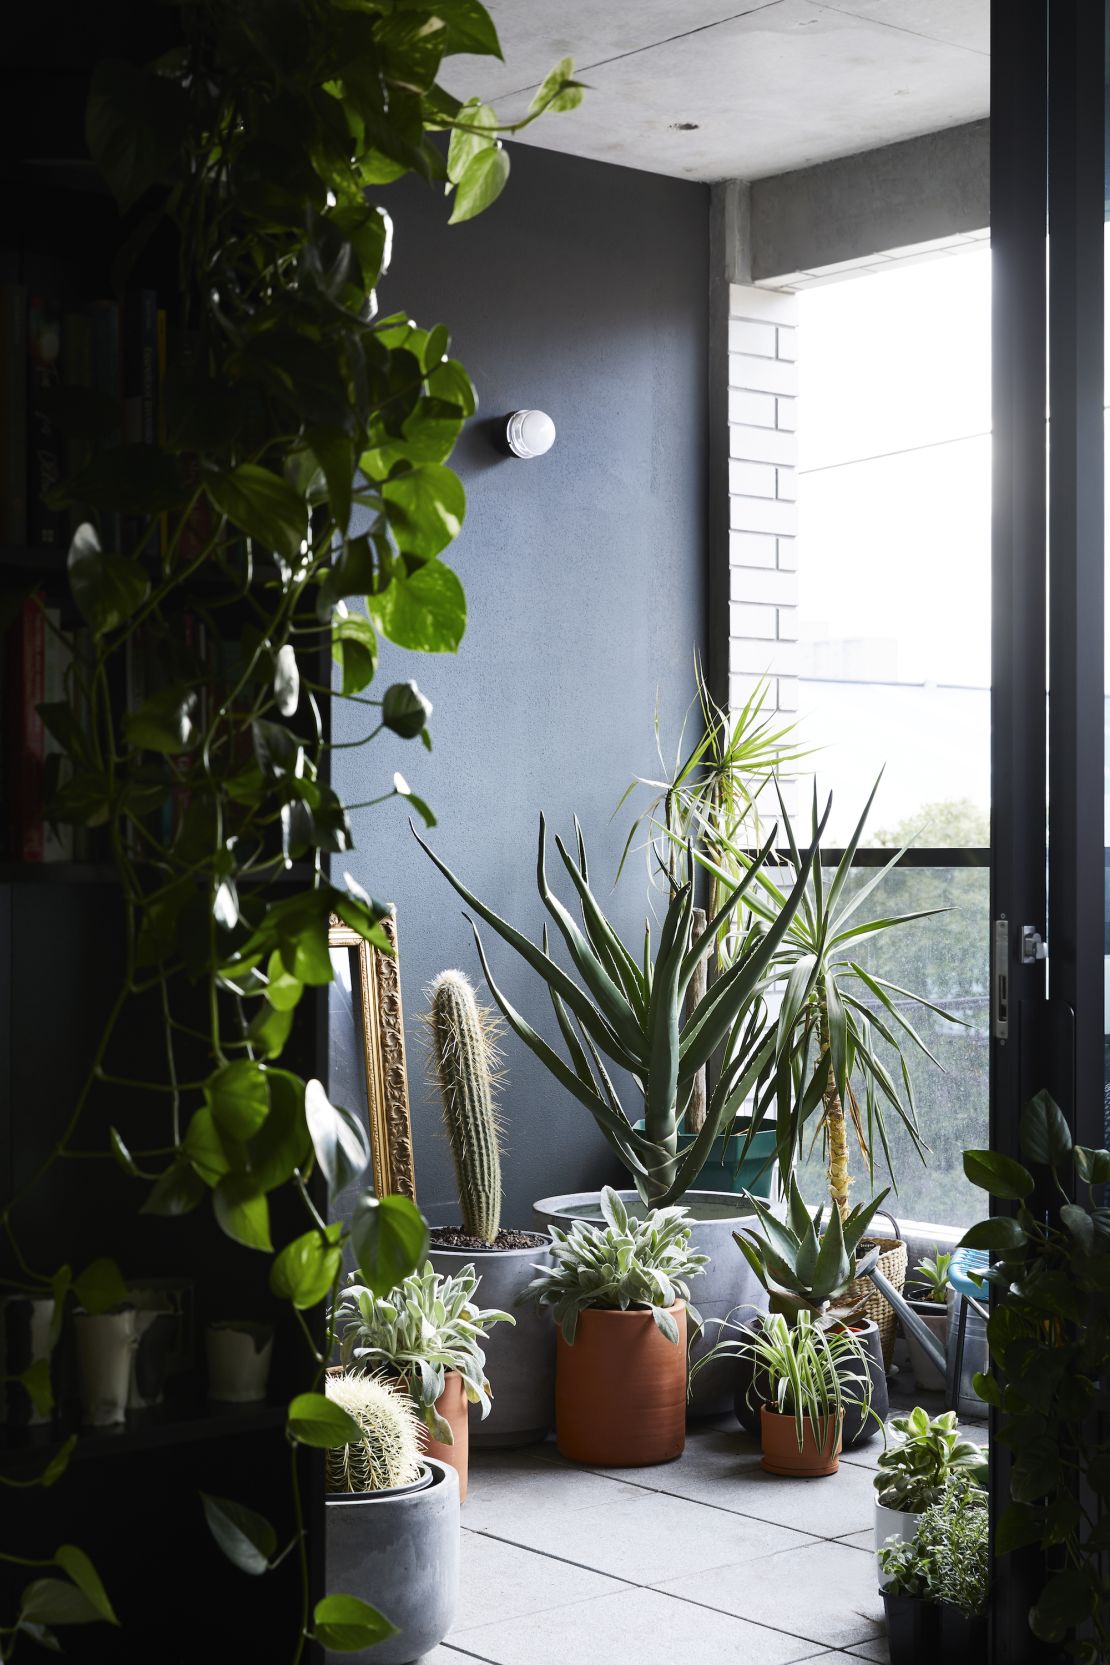 Plants can help freshen up indoor living spaces.